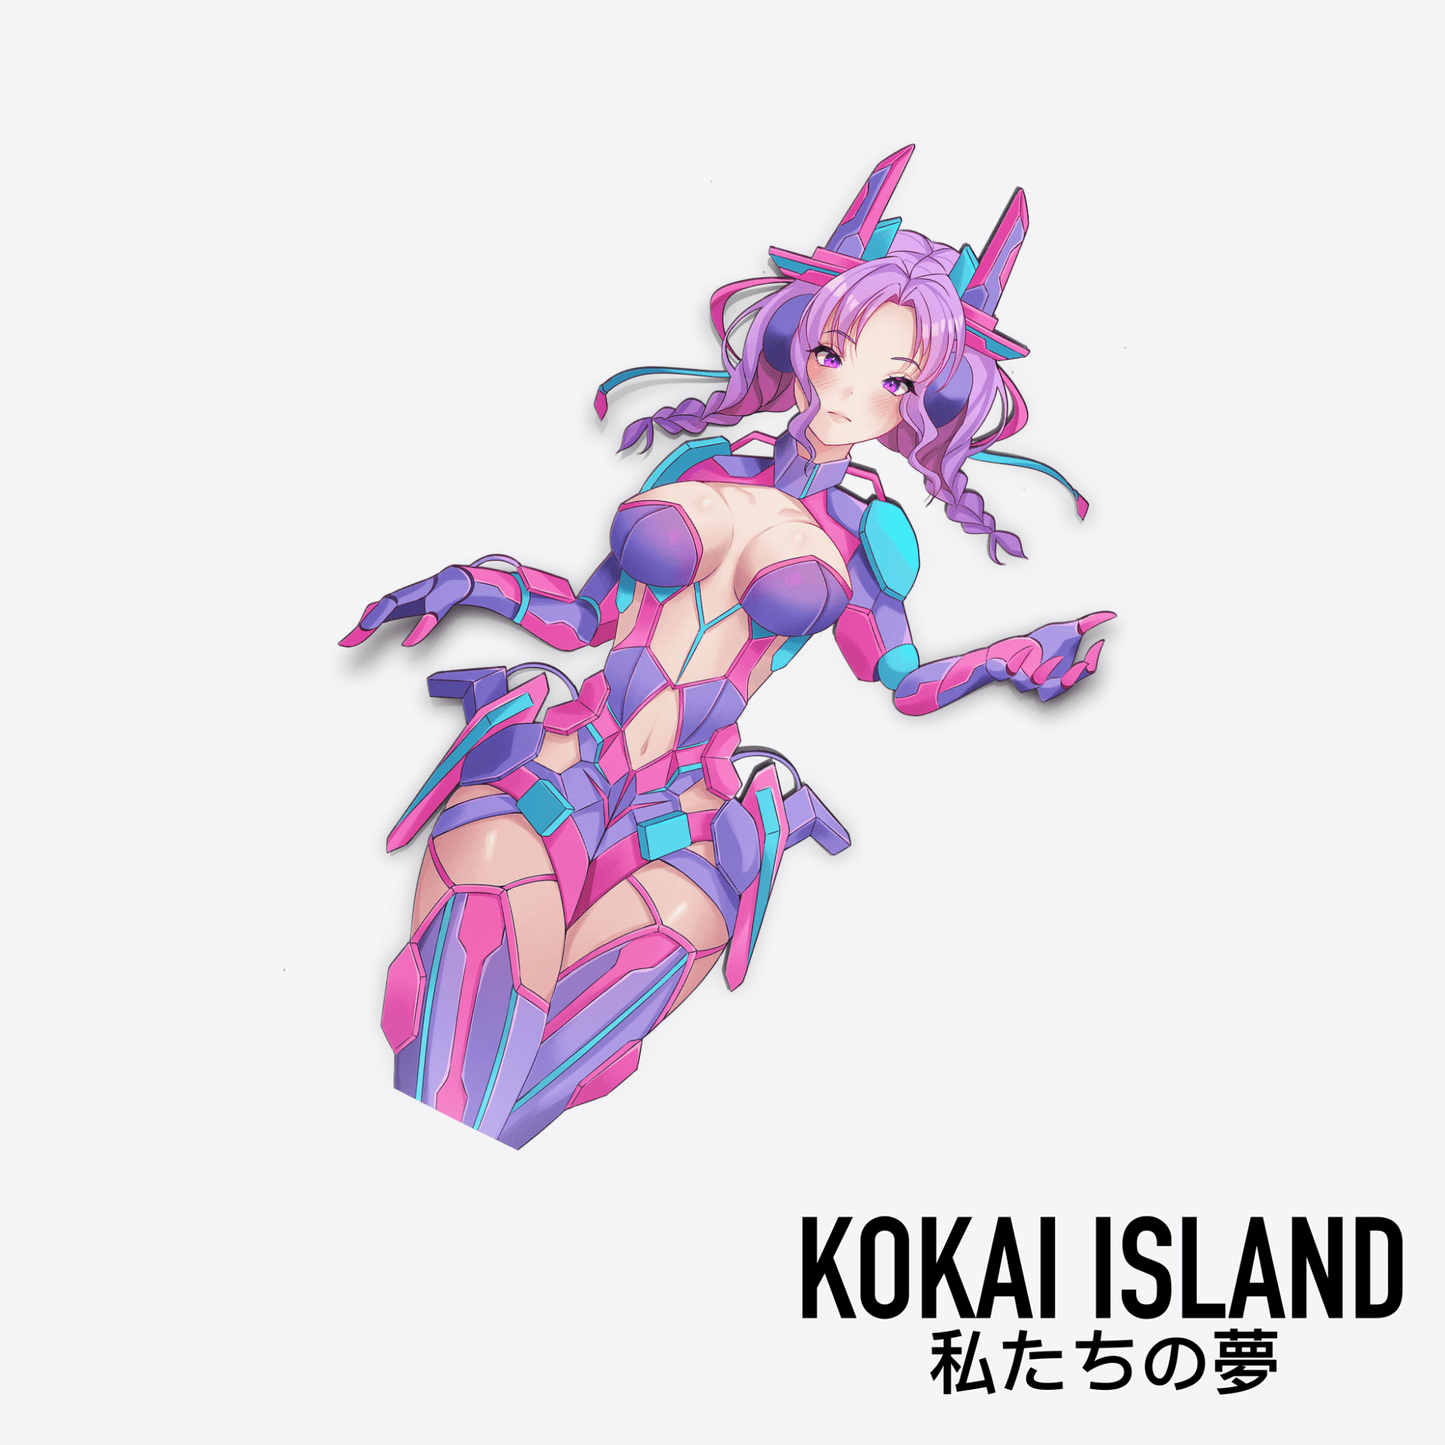 The Cyberlilac Stellar Koko DecalDecalKokai Island